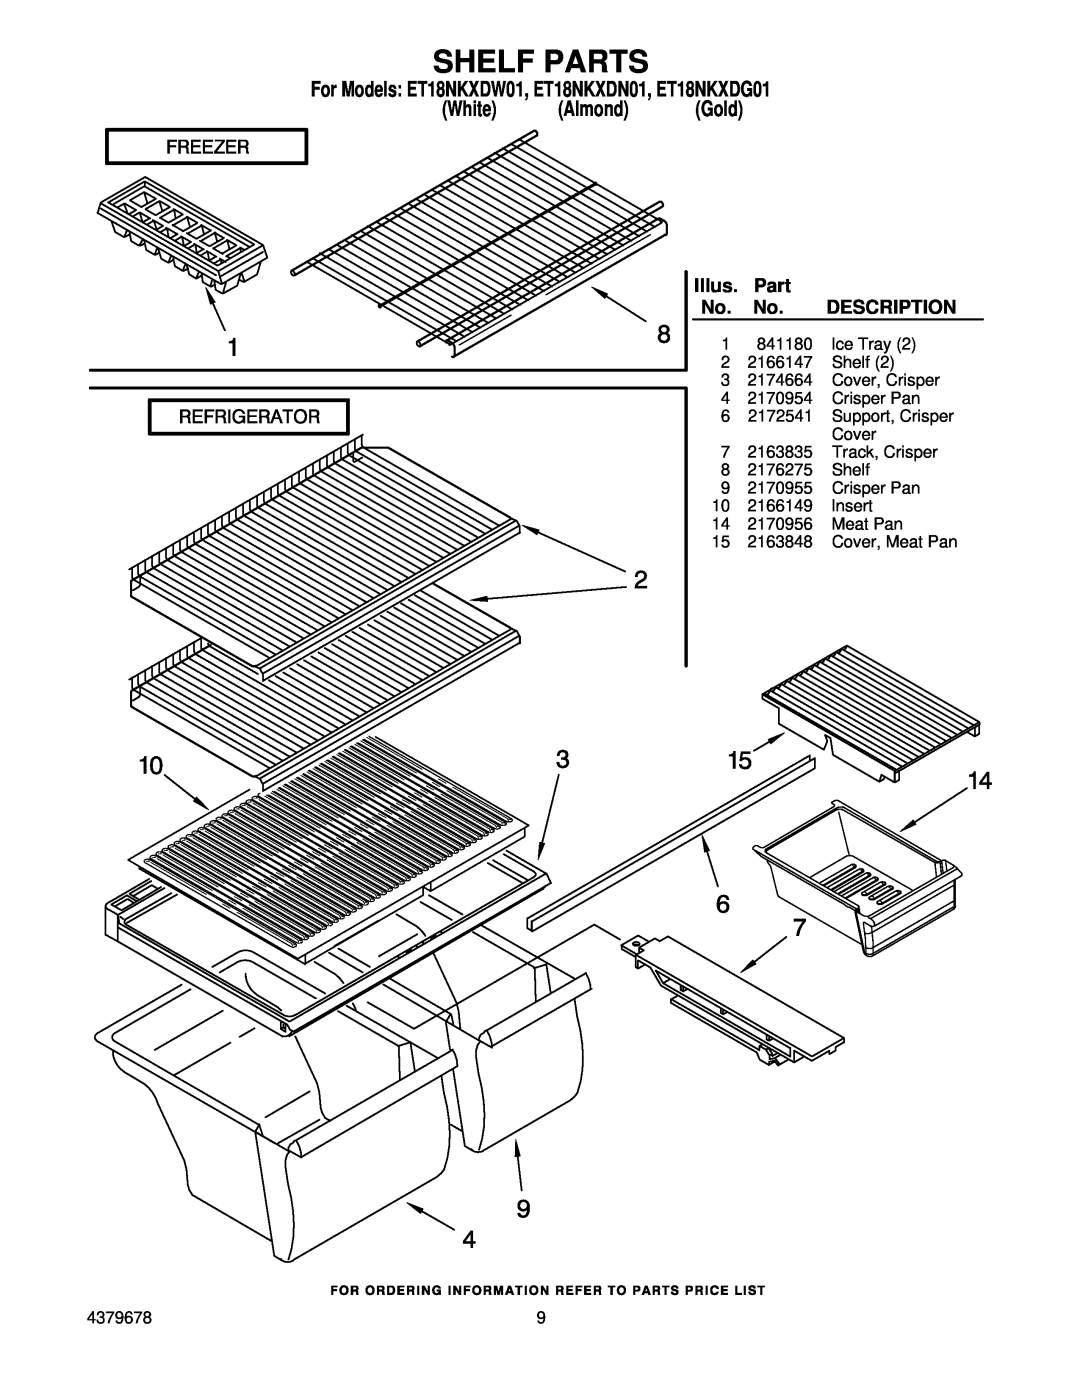 Whirlpool manual Shelf Parts, For Models ET18NKXDW01, ET18NKXDN01, ET18NKXDG01 White Almond Gold, Illus, Description 